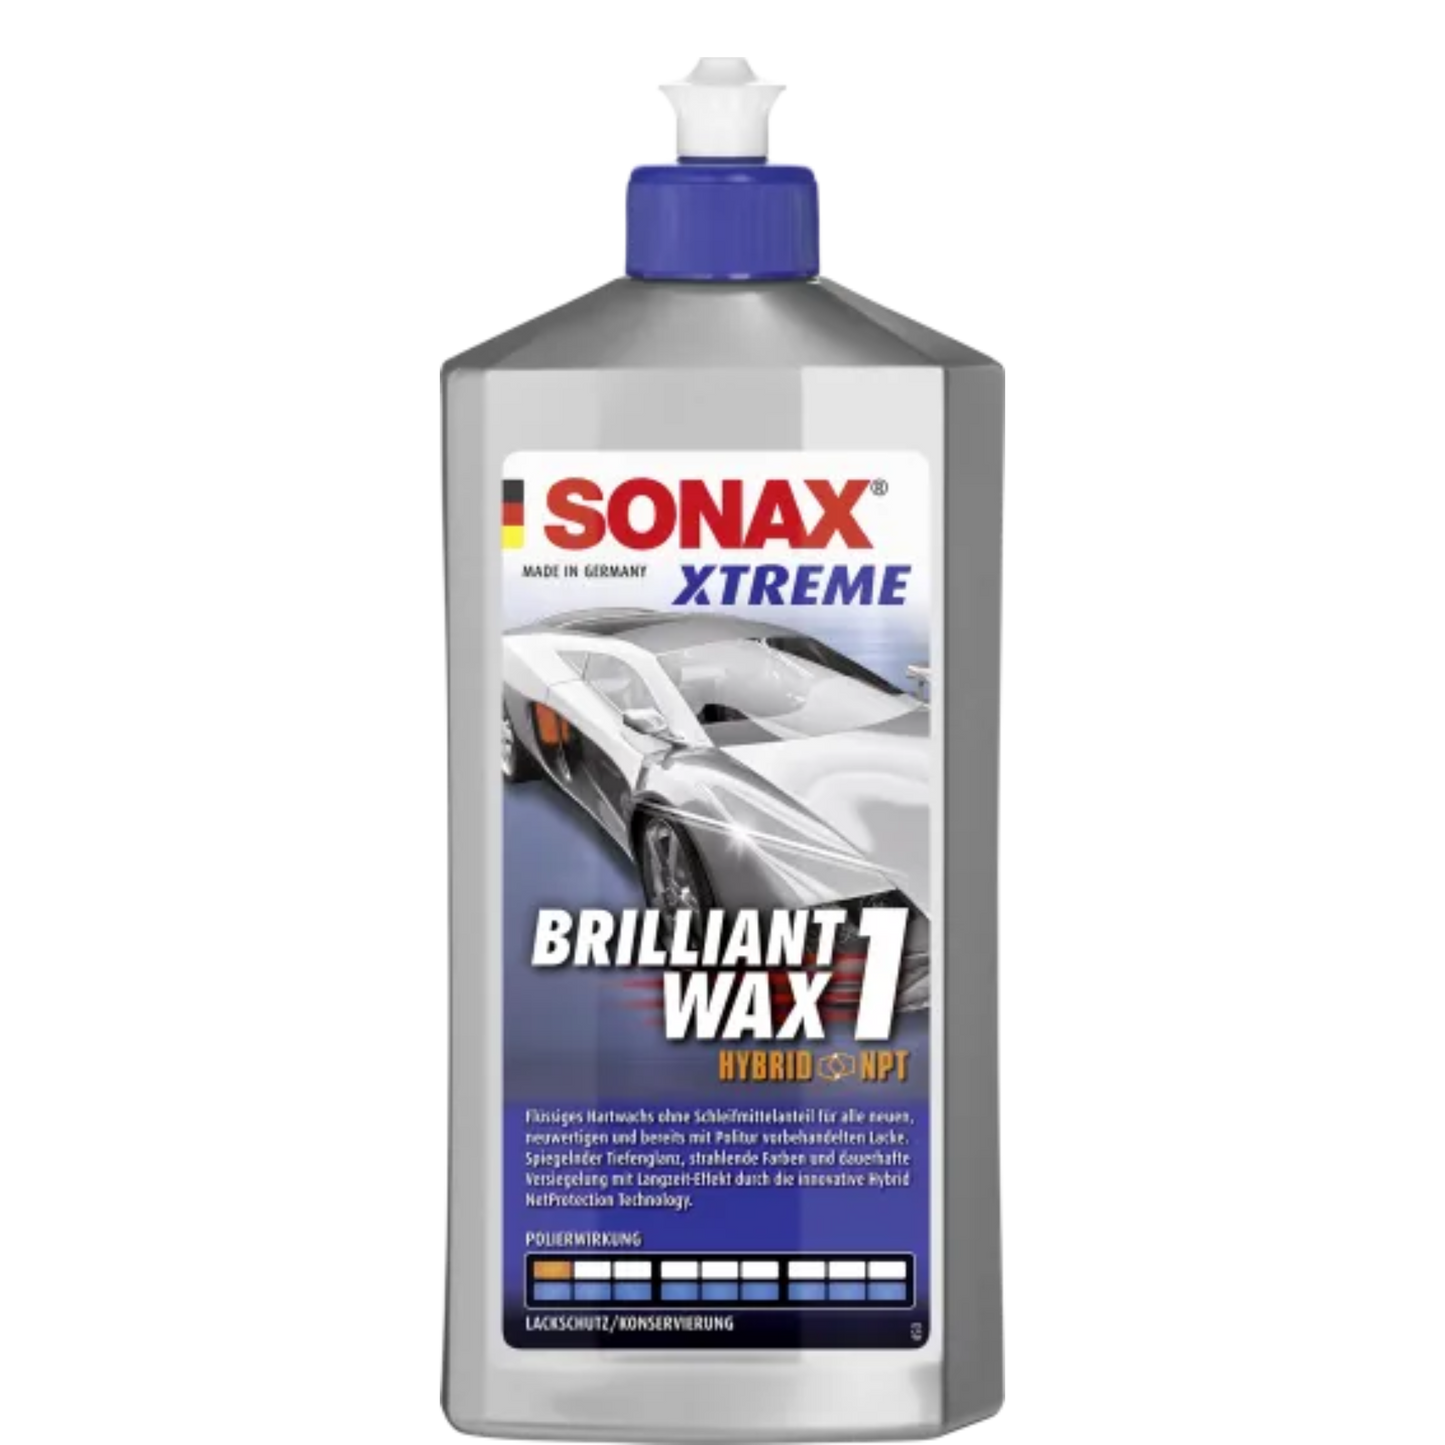 SONAX XTREME Brilliantwax 1 Hybrid NPT - 500ml